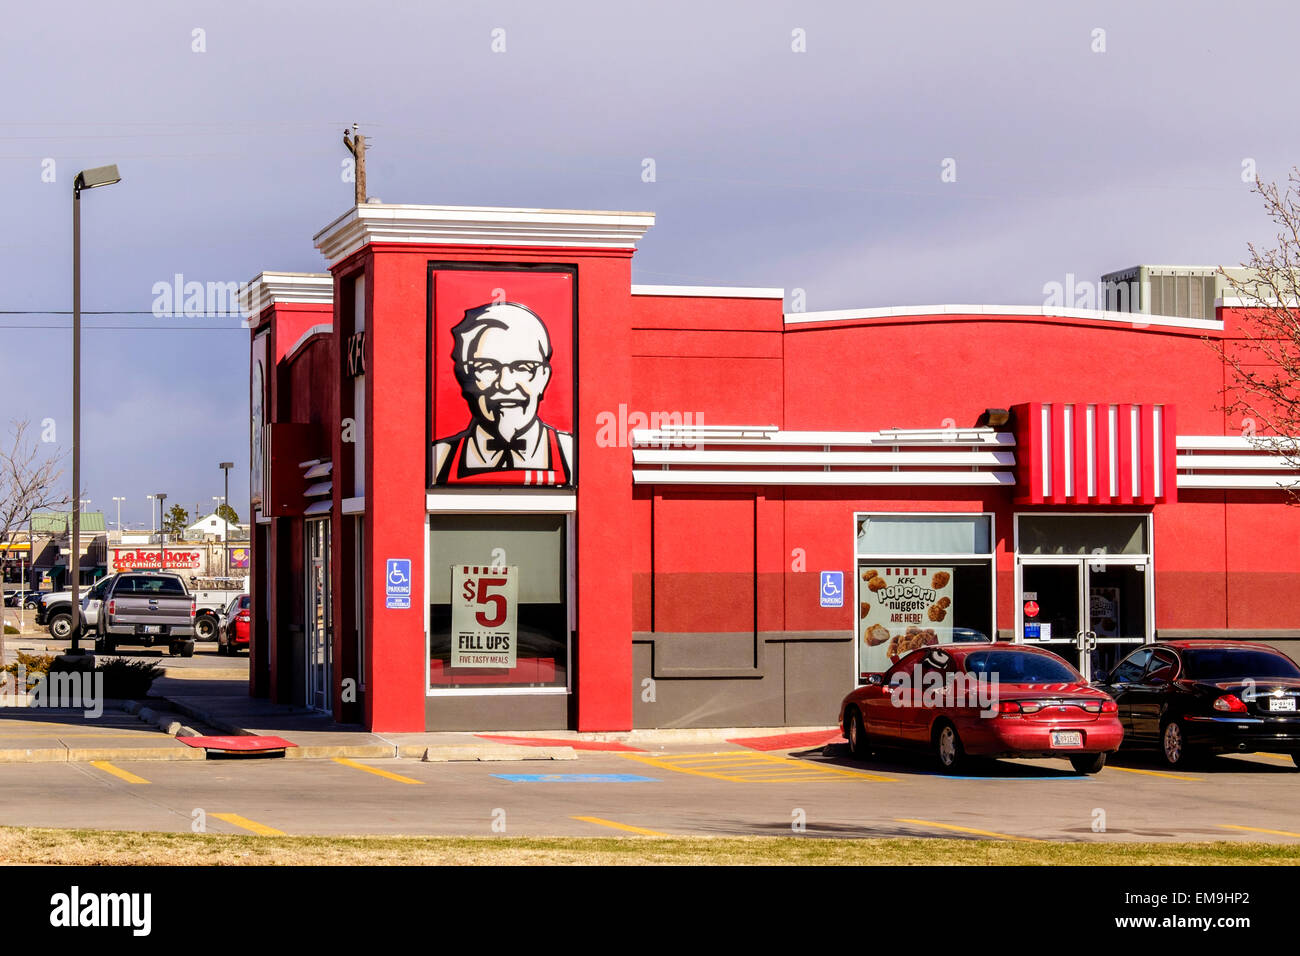 The exterior of a KFC, Kentucky Fried Chicken, building in Oklahoma City, Oklahoma, USA. Stock Photo